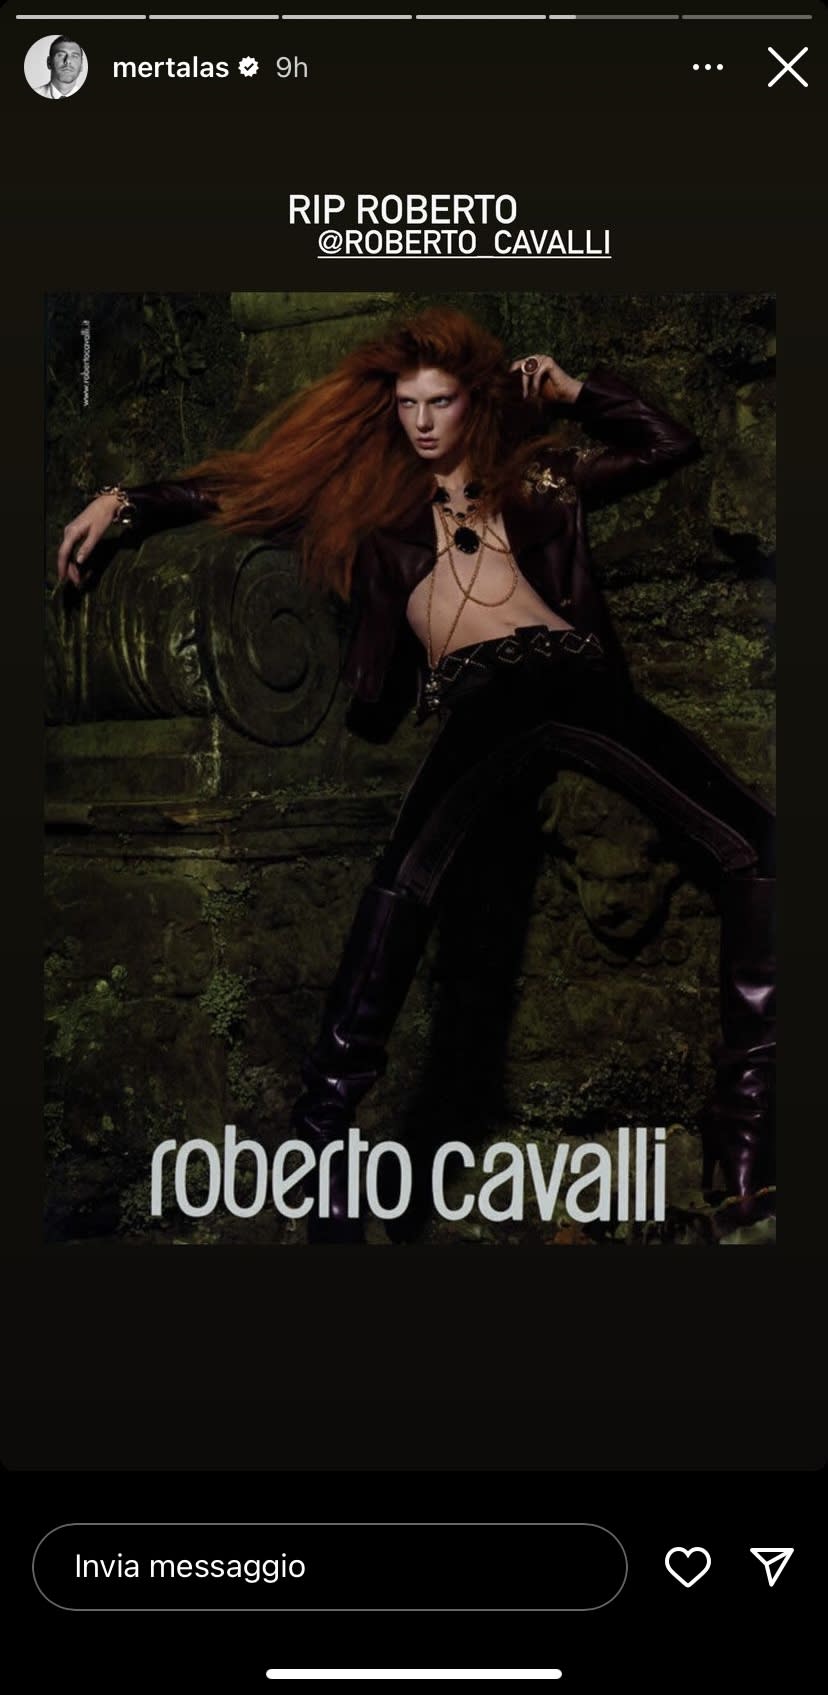 Mert Alas’ Instagram post in tribute to Roberto Cavalli.